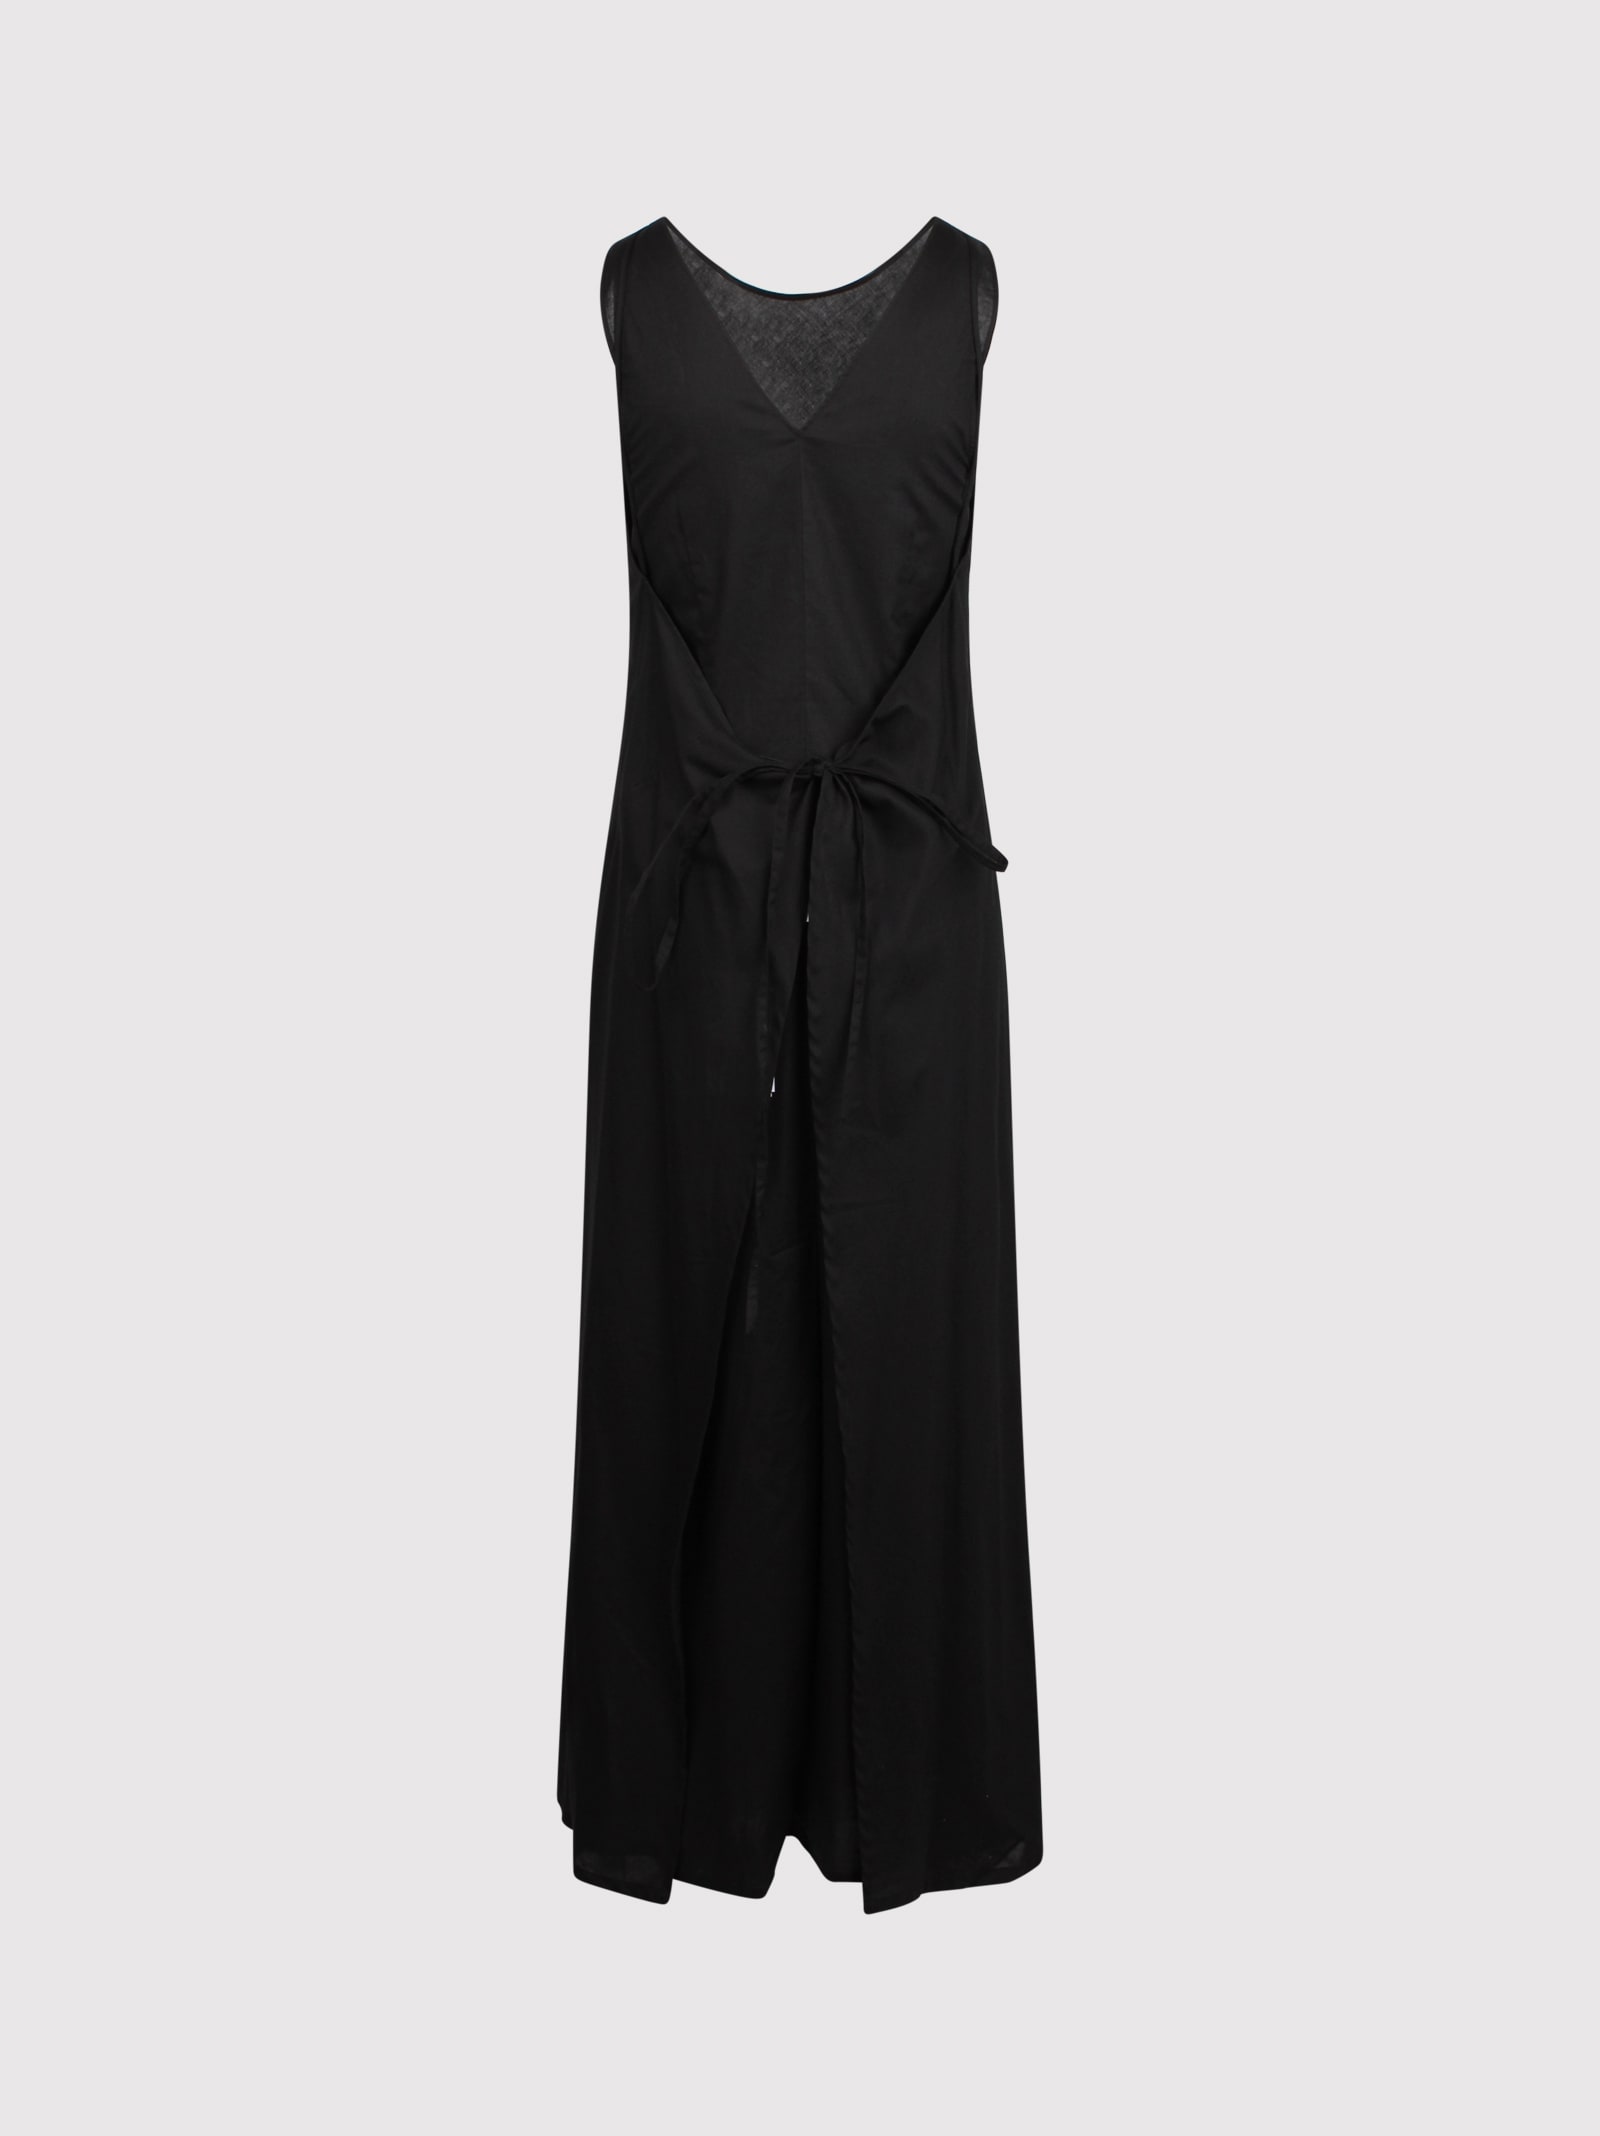 Shop Plan C Double Layered Black Cotton Dress